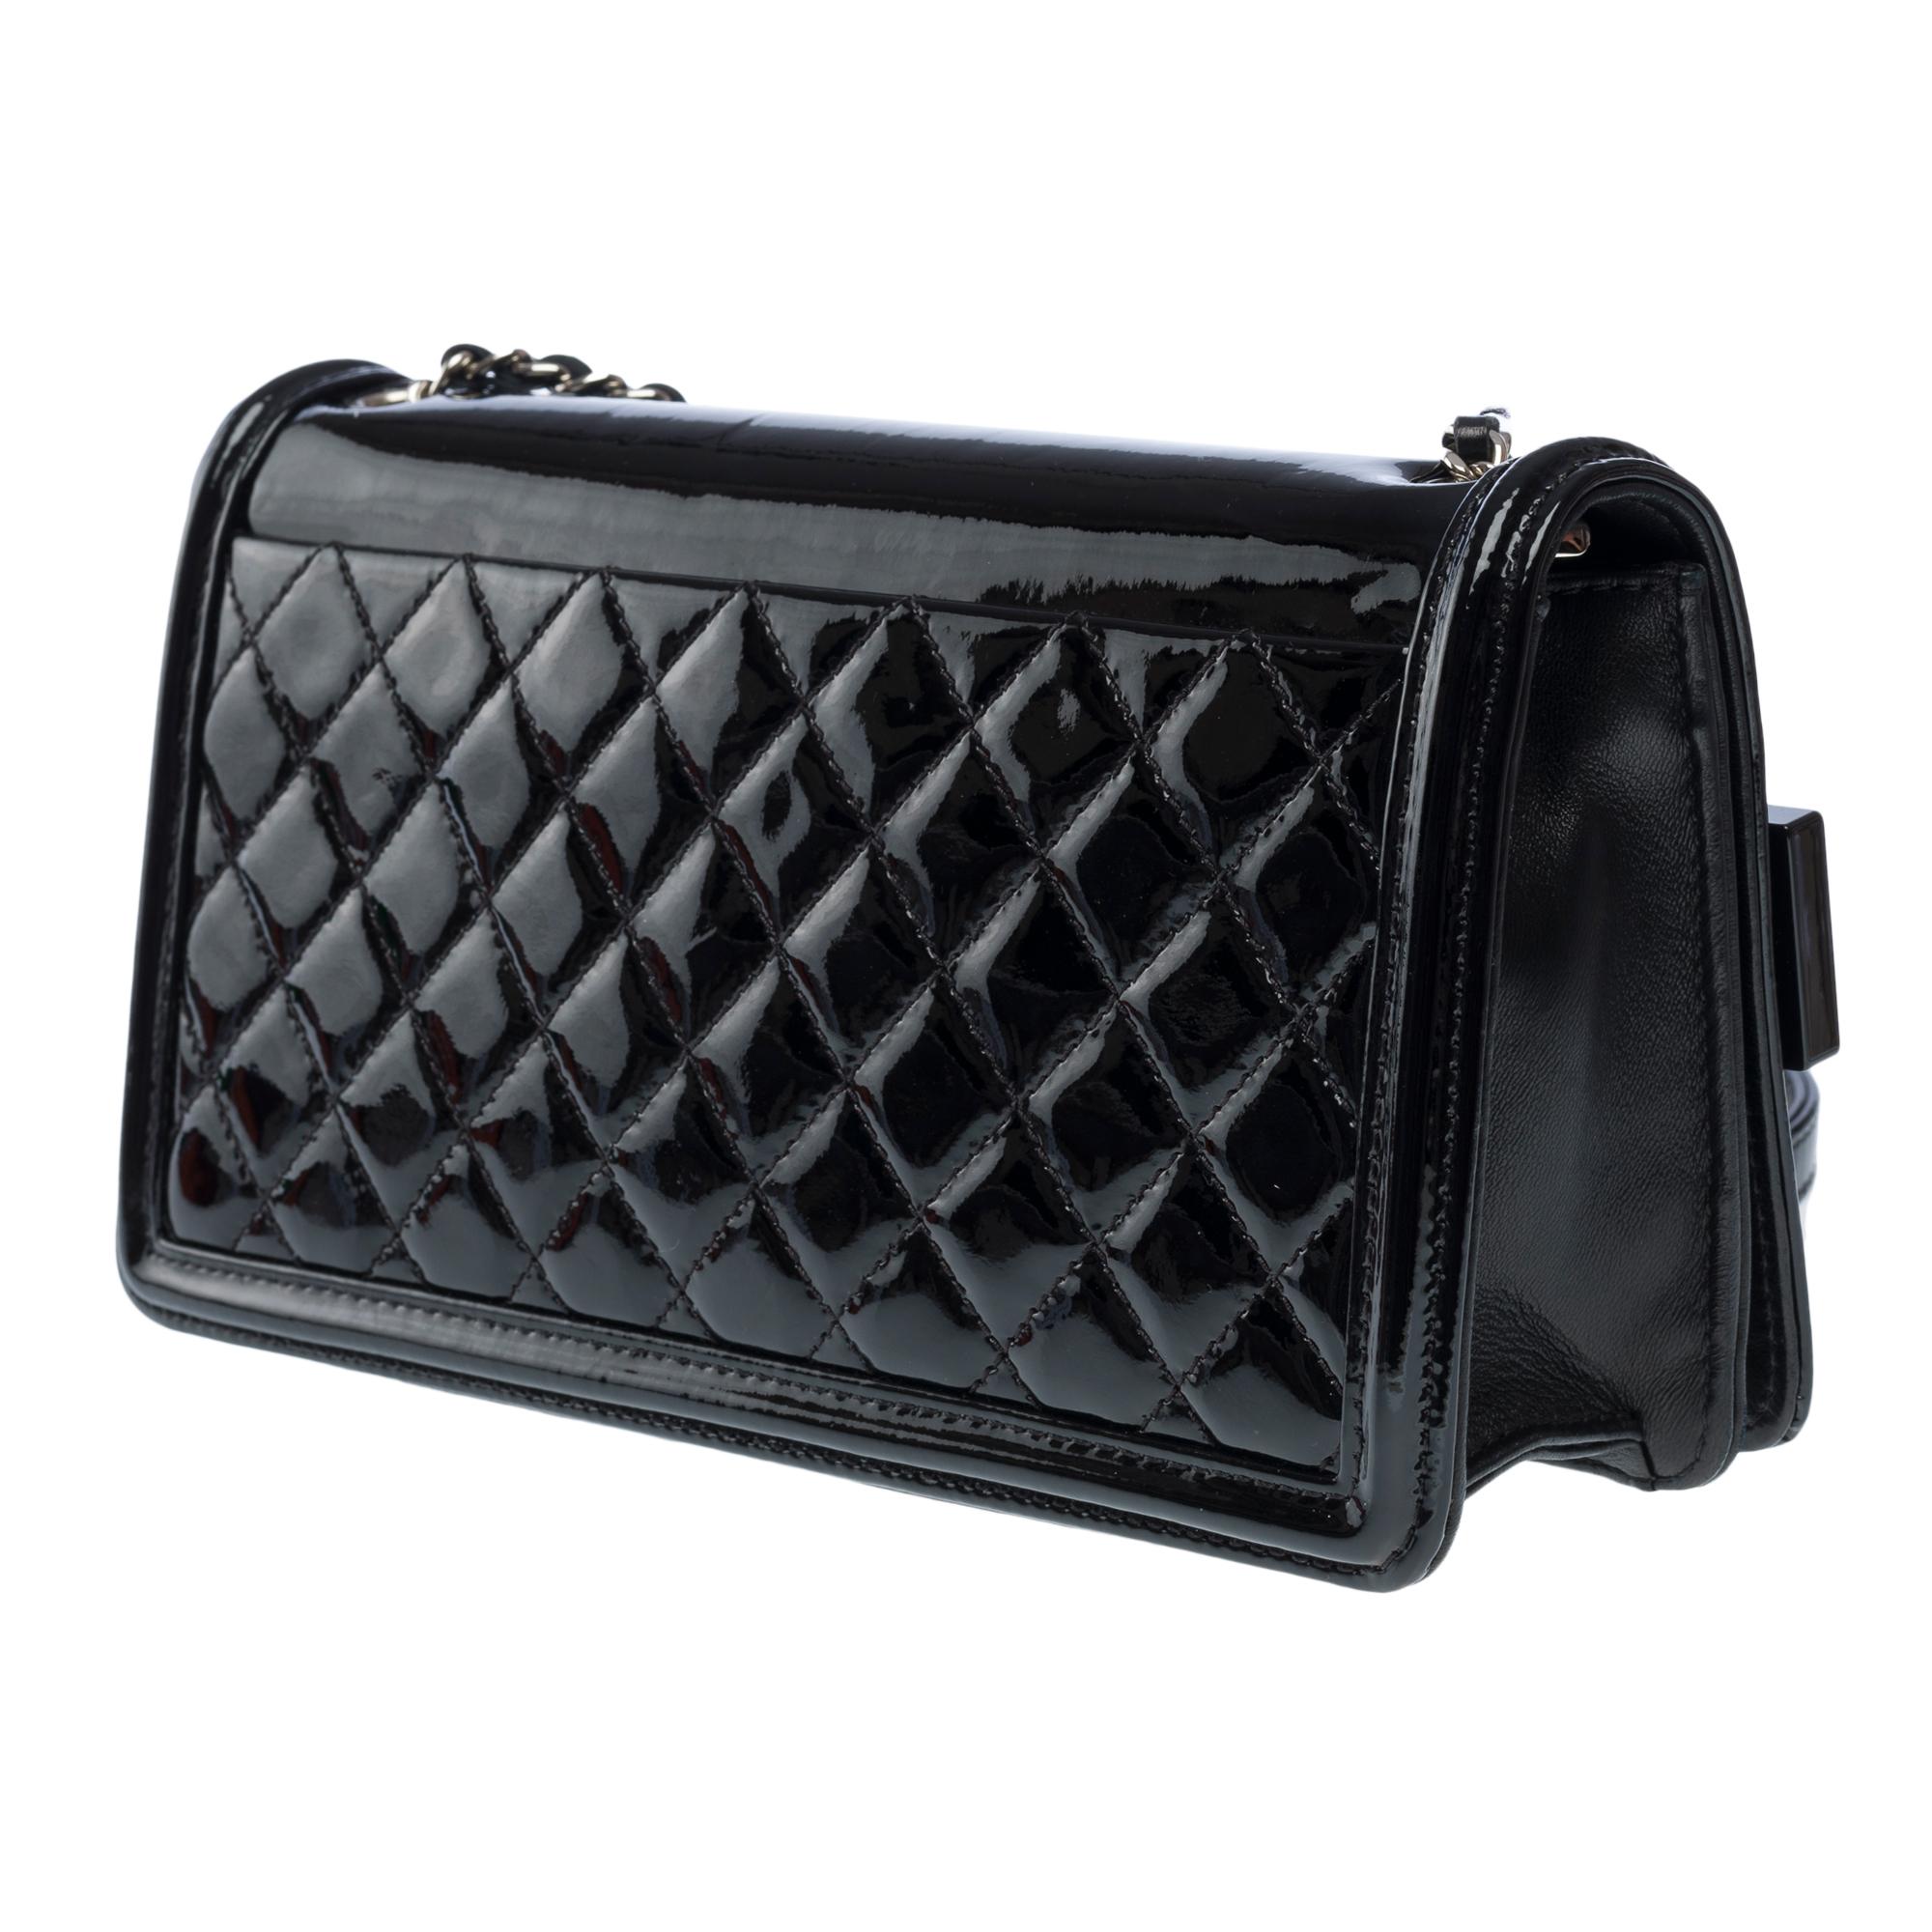 Limited edition Chanel Lego Brick shoulder flap bag in black&white leather, SHW 2